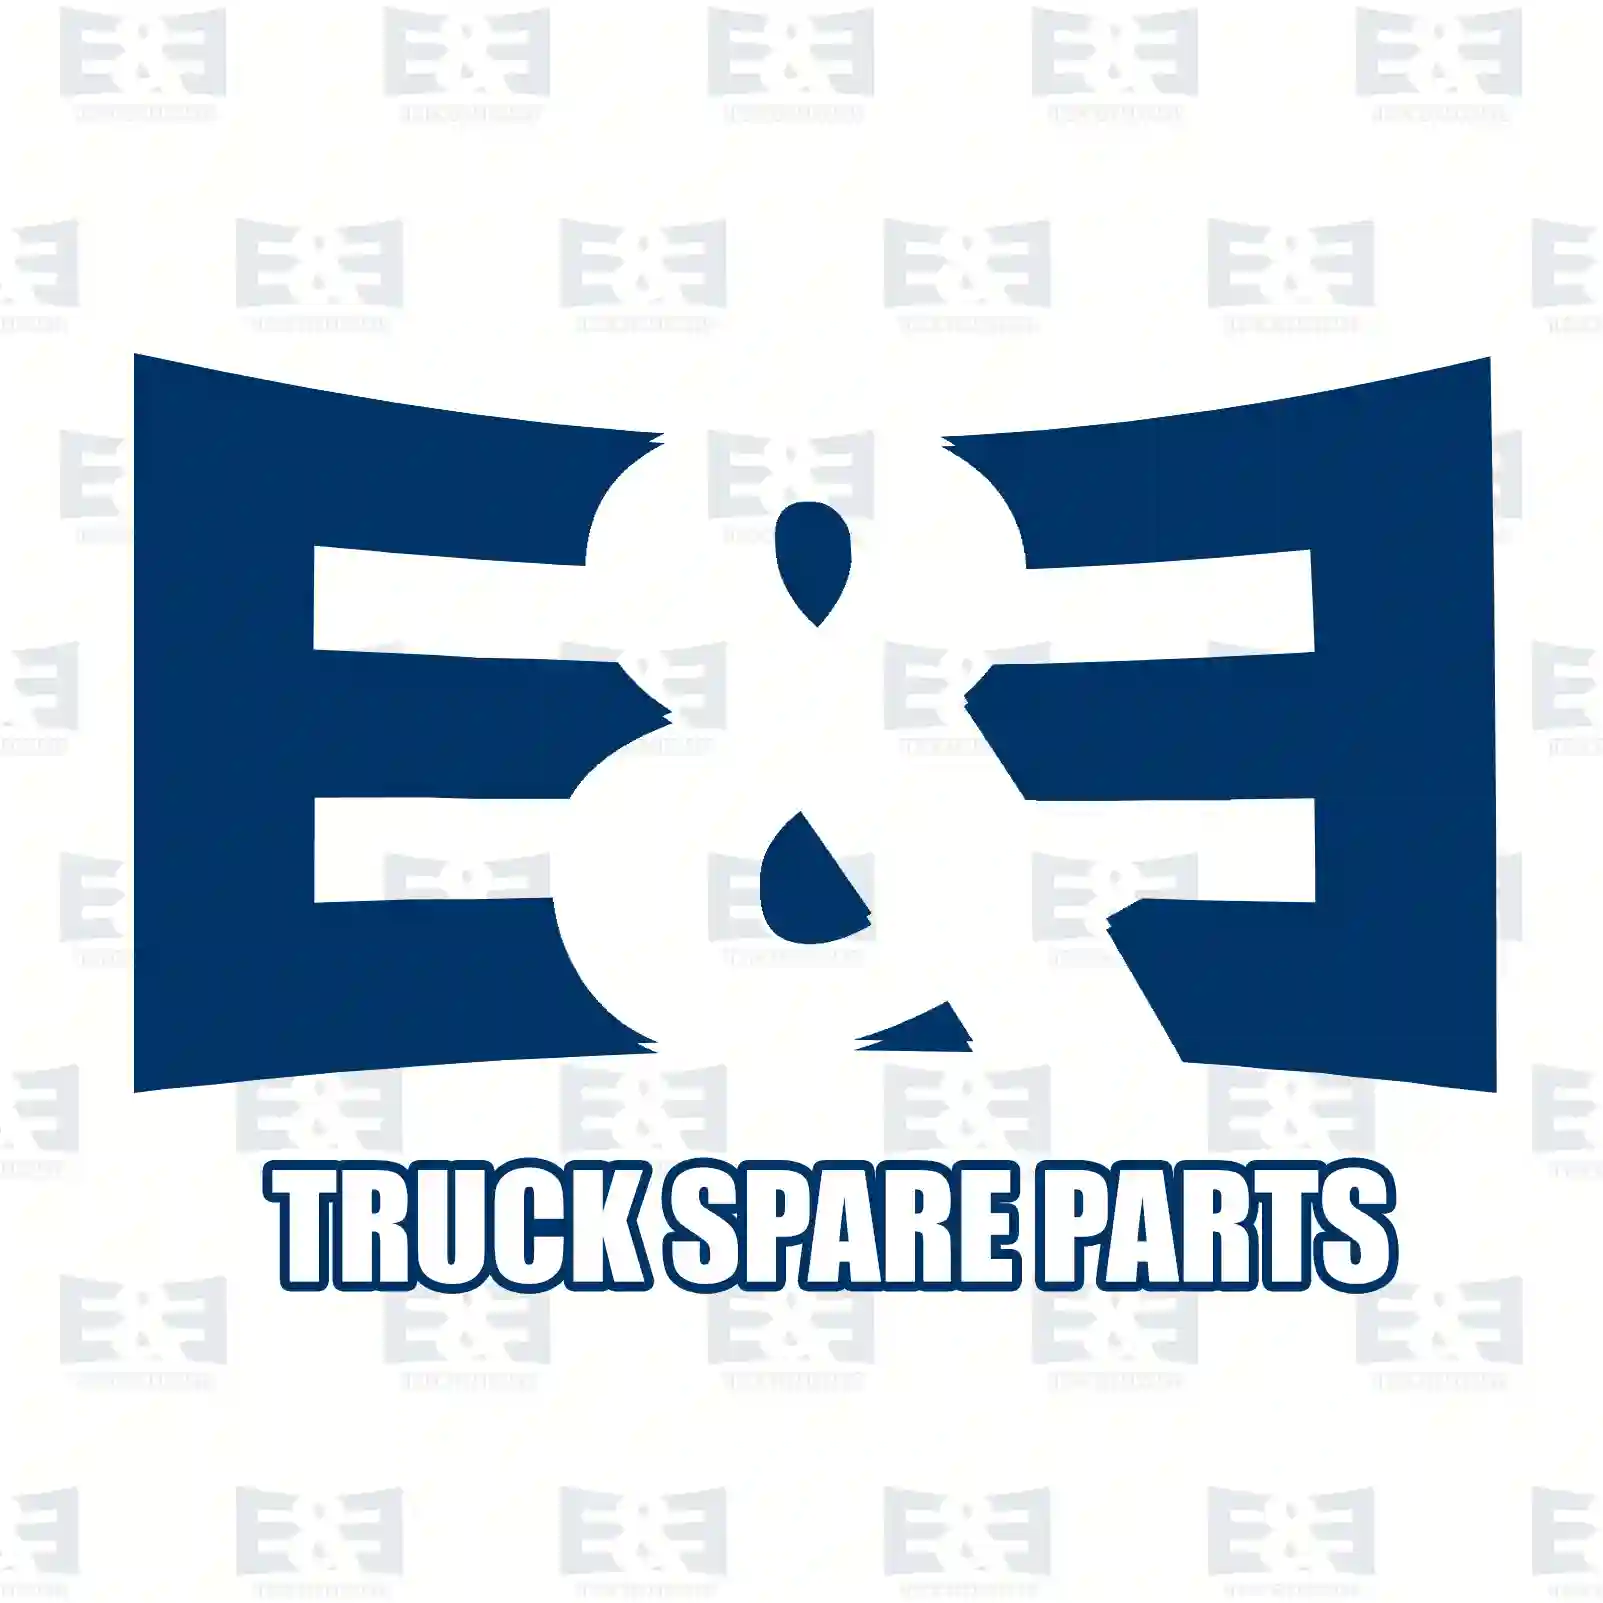 Standard Parts Link yoke, EE No 2E2285360 ,  oem no:06360600105, 06360610105, 06360620105, 06360640105, 06360650105, 06360690003, 85900015069, 87340230300, 87340270300, N1011001902, N1014007983 E&E Truck Spare Parts | Truck Spare Parts, Auotomotive Spare Parts